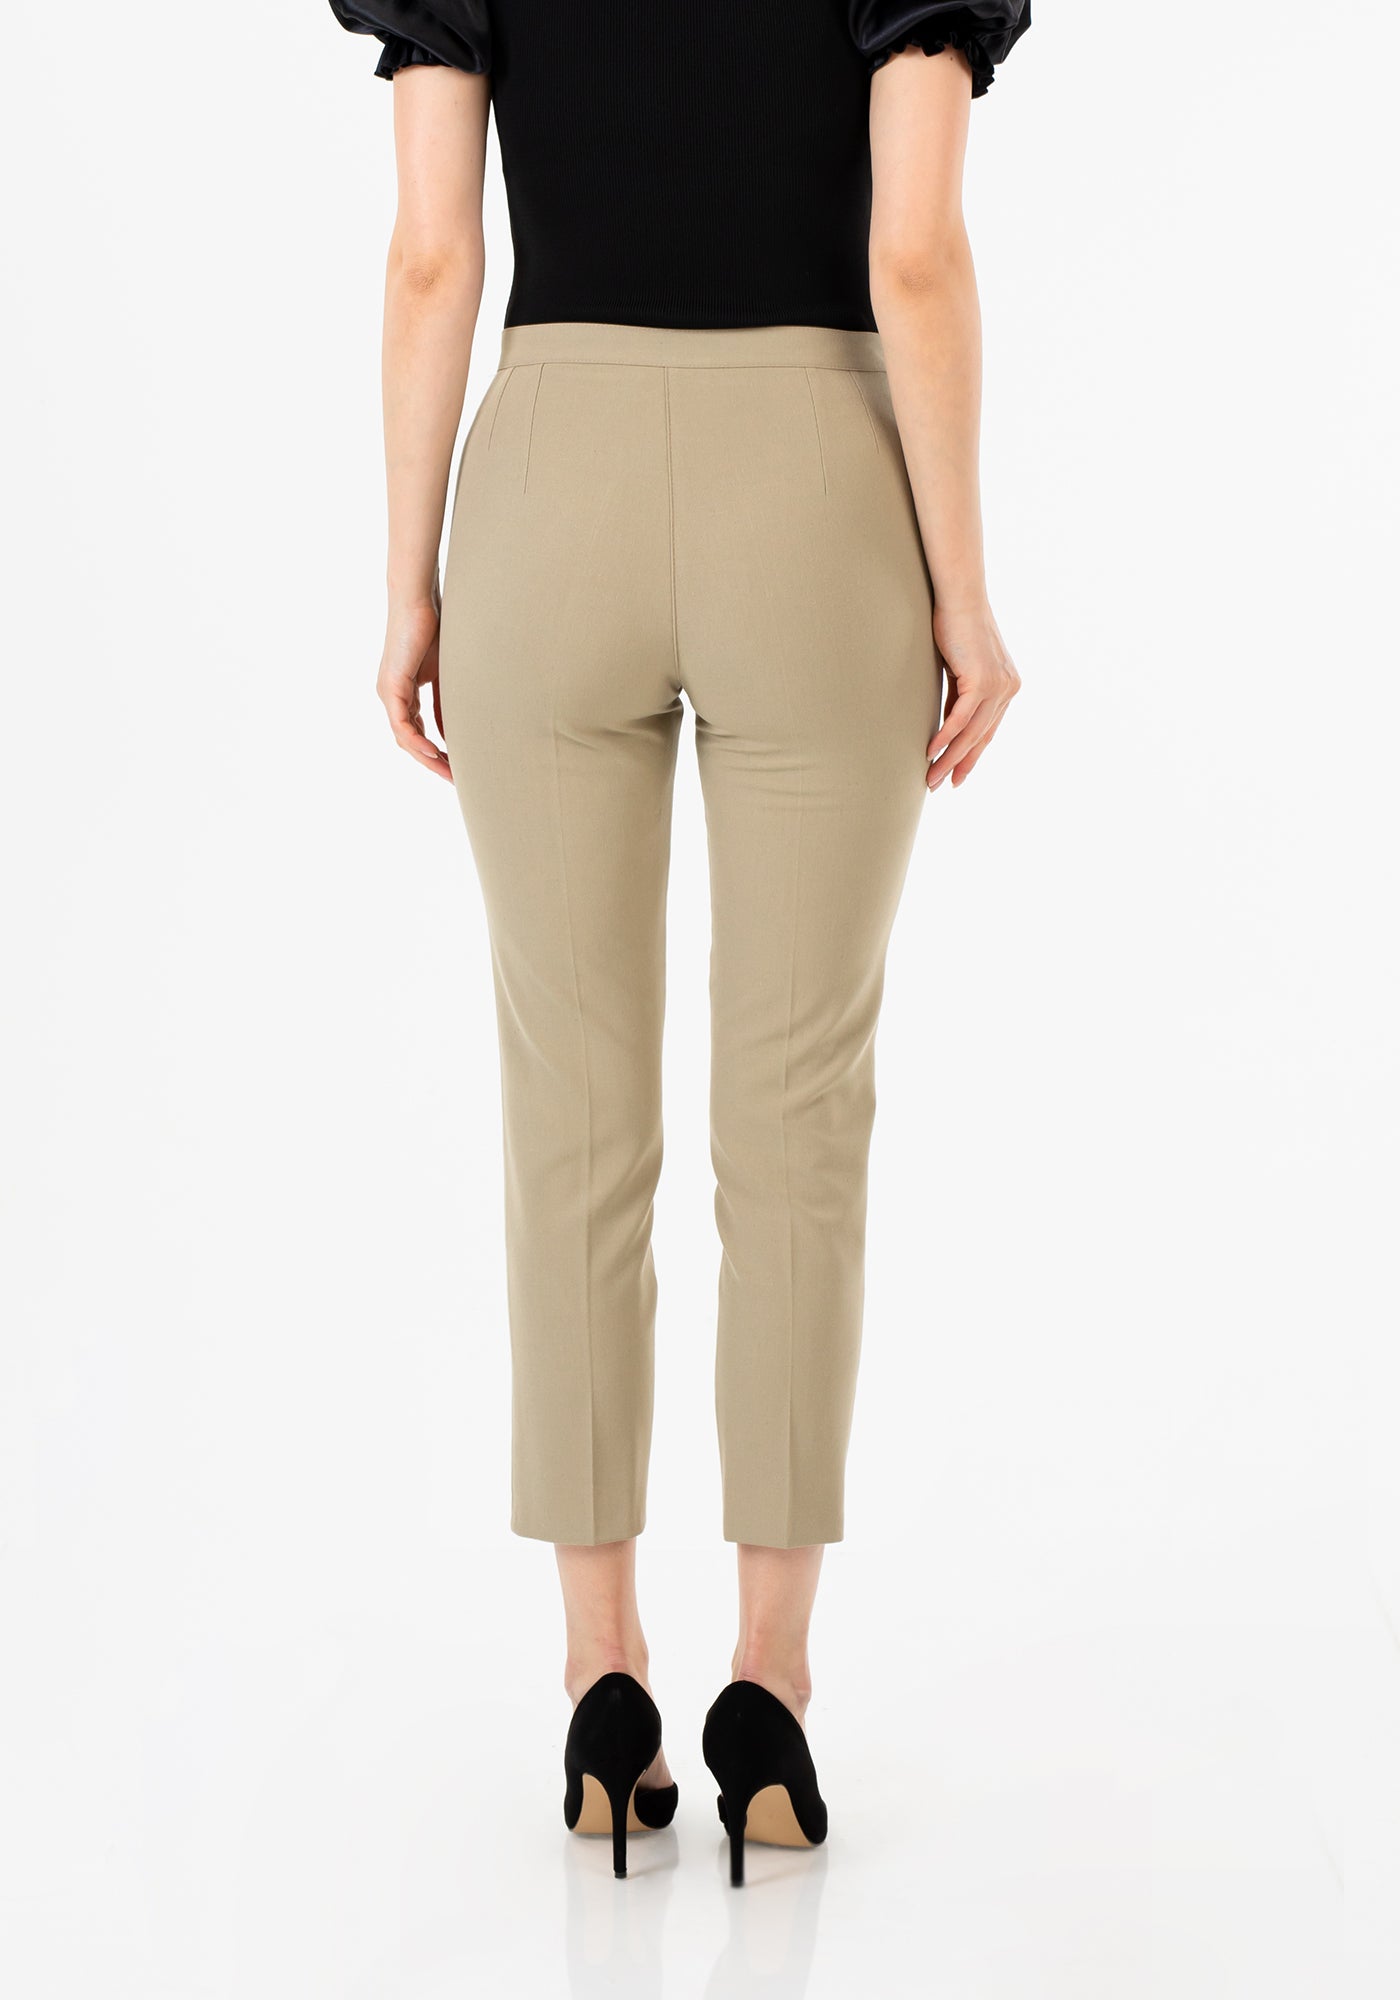 G-Line Women's Beige High Waist Slim Fit Stretchy Skinny Work Pants G-Line